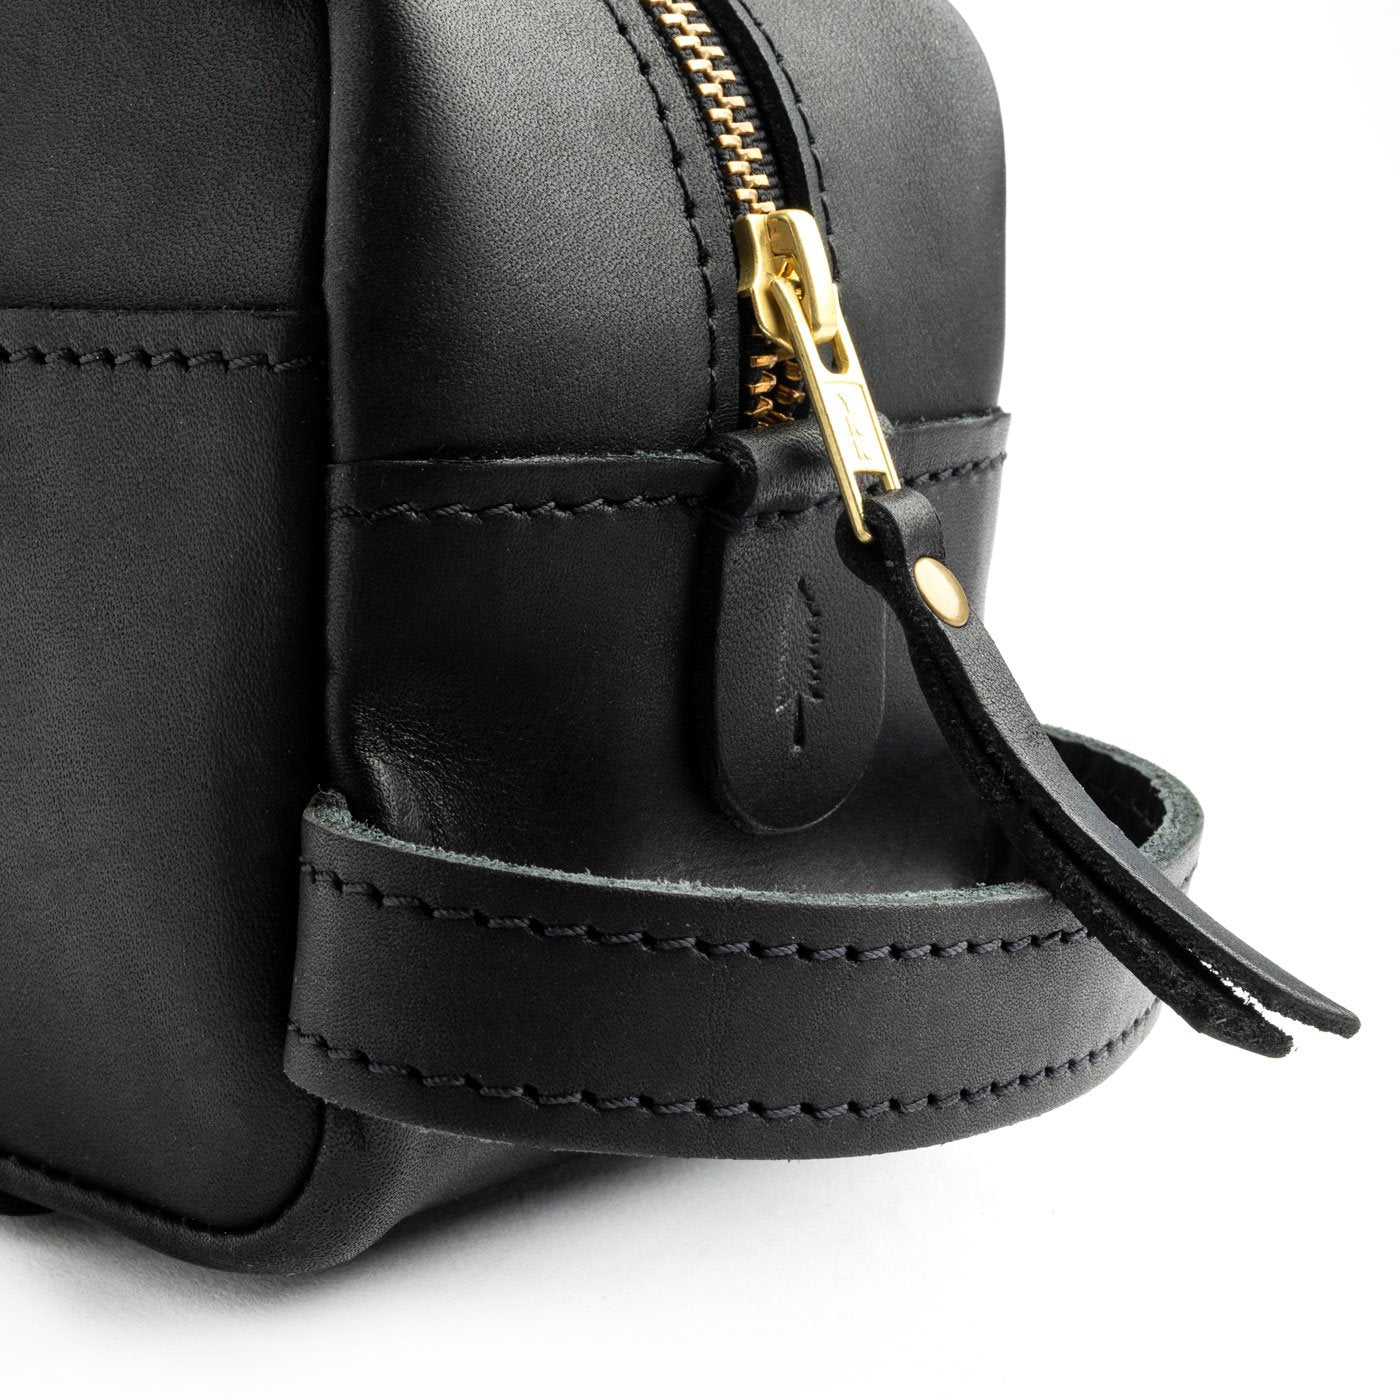 All Color: Black | handmade leather dopp kit